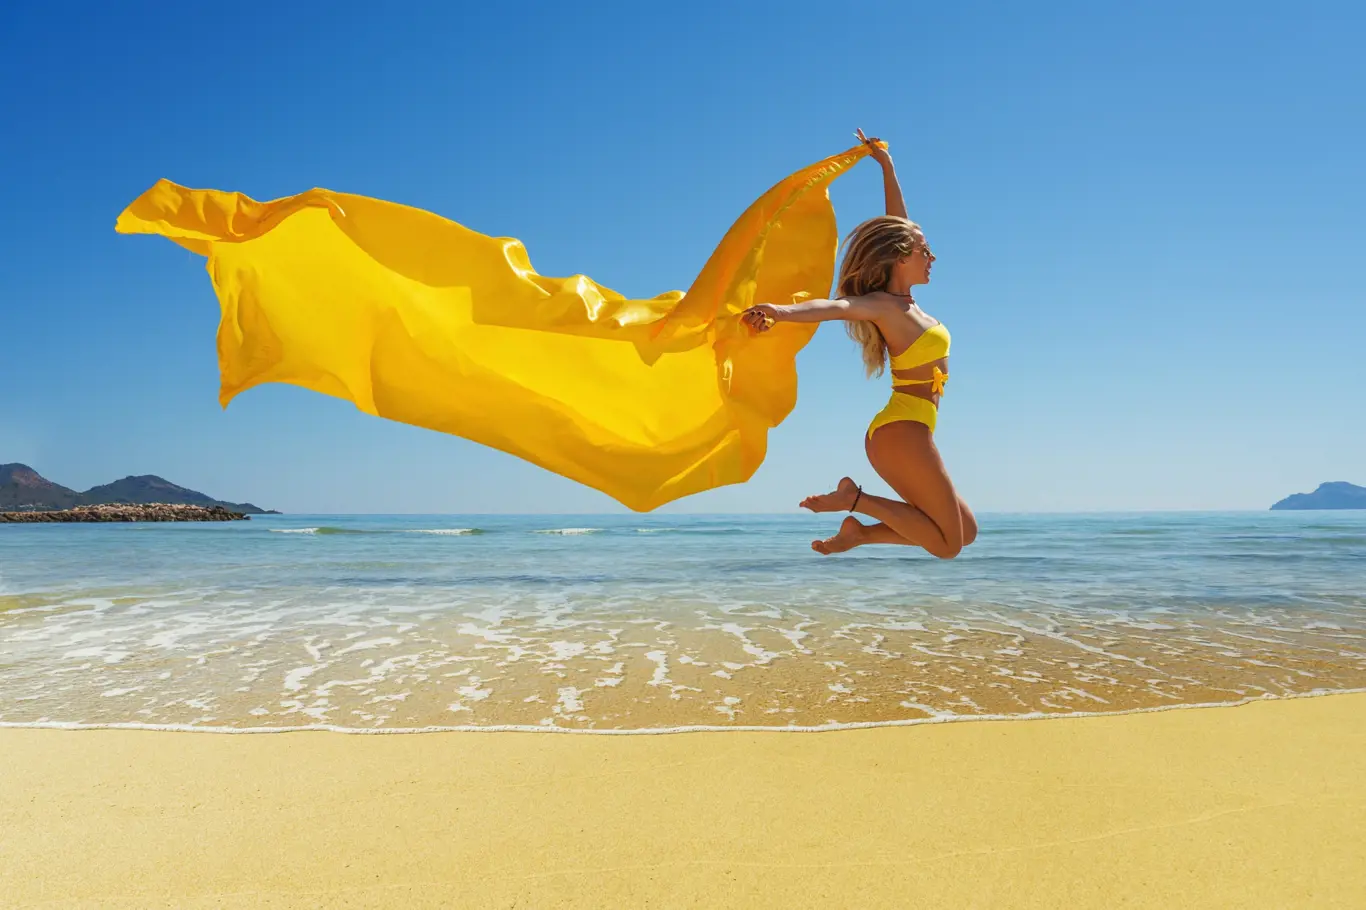 šťastná mladá žena na pláži ve žlutých plavkách